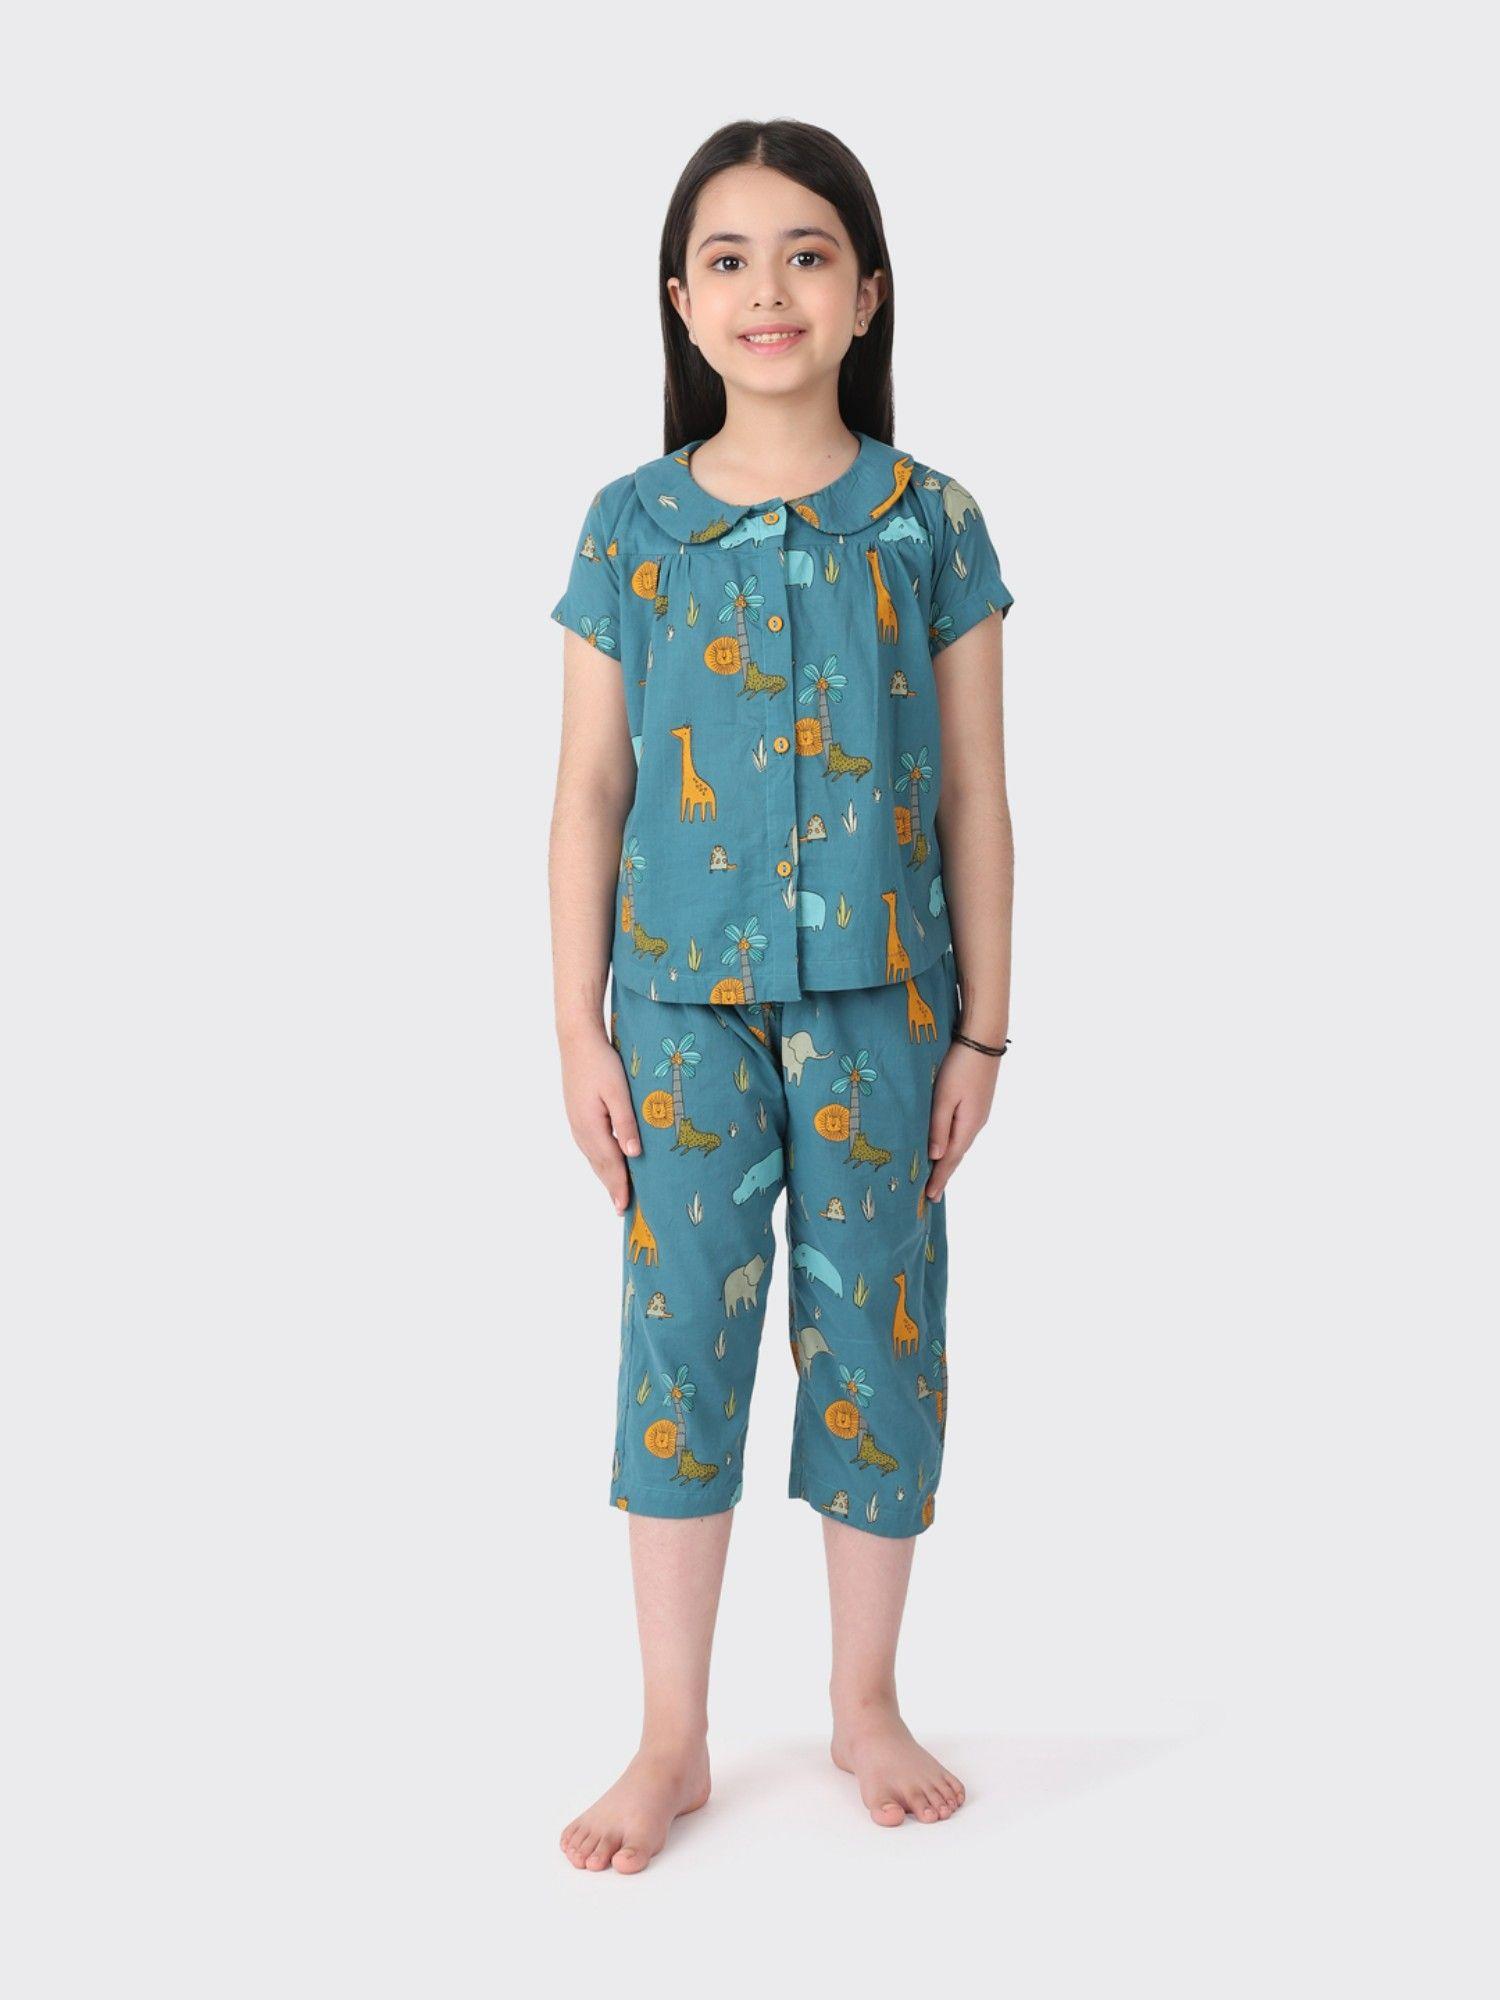 teal-cotton-printed-girls-pyjamas-(set-of-2)